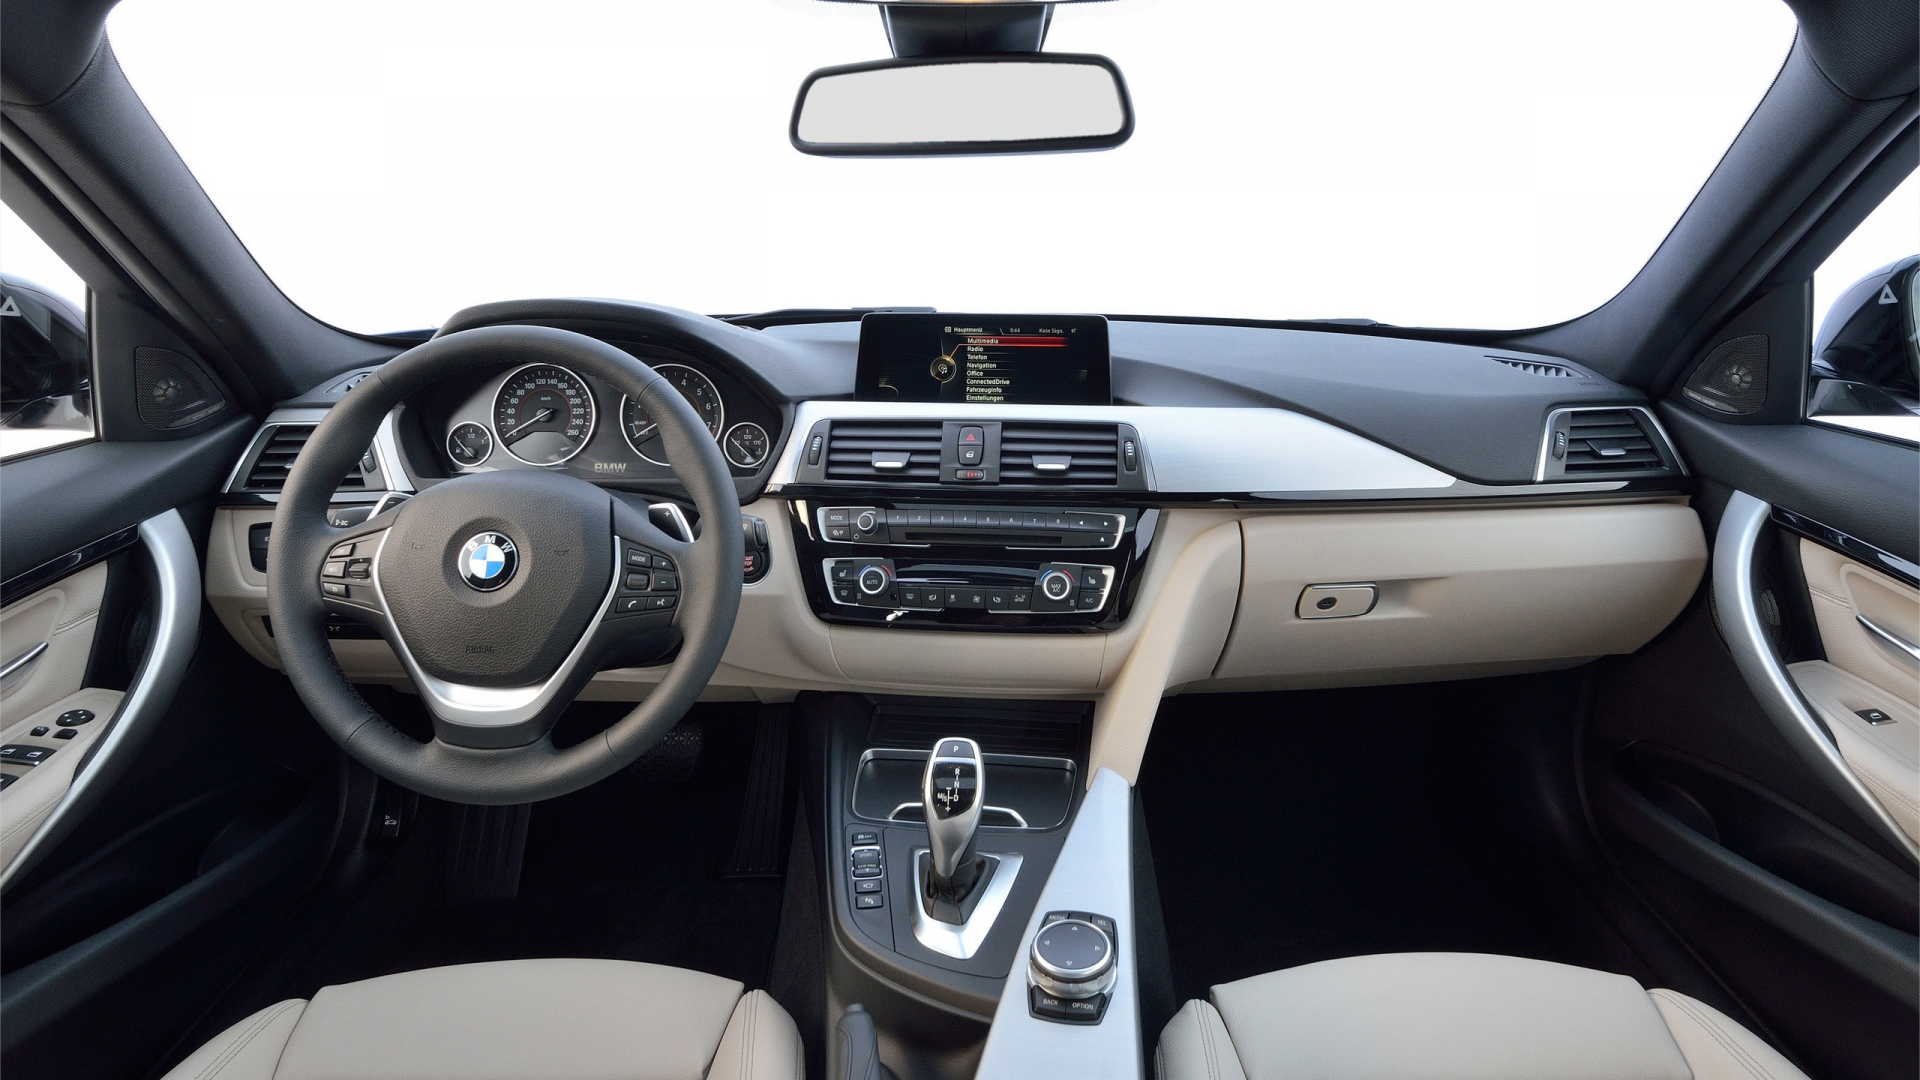 2016 BMW 3 Series Interior for 1920 x 1080 HDTV 1080p resolution